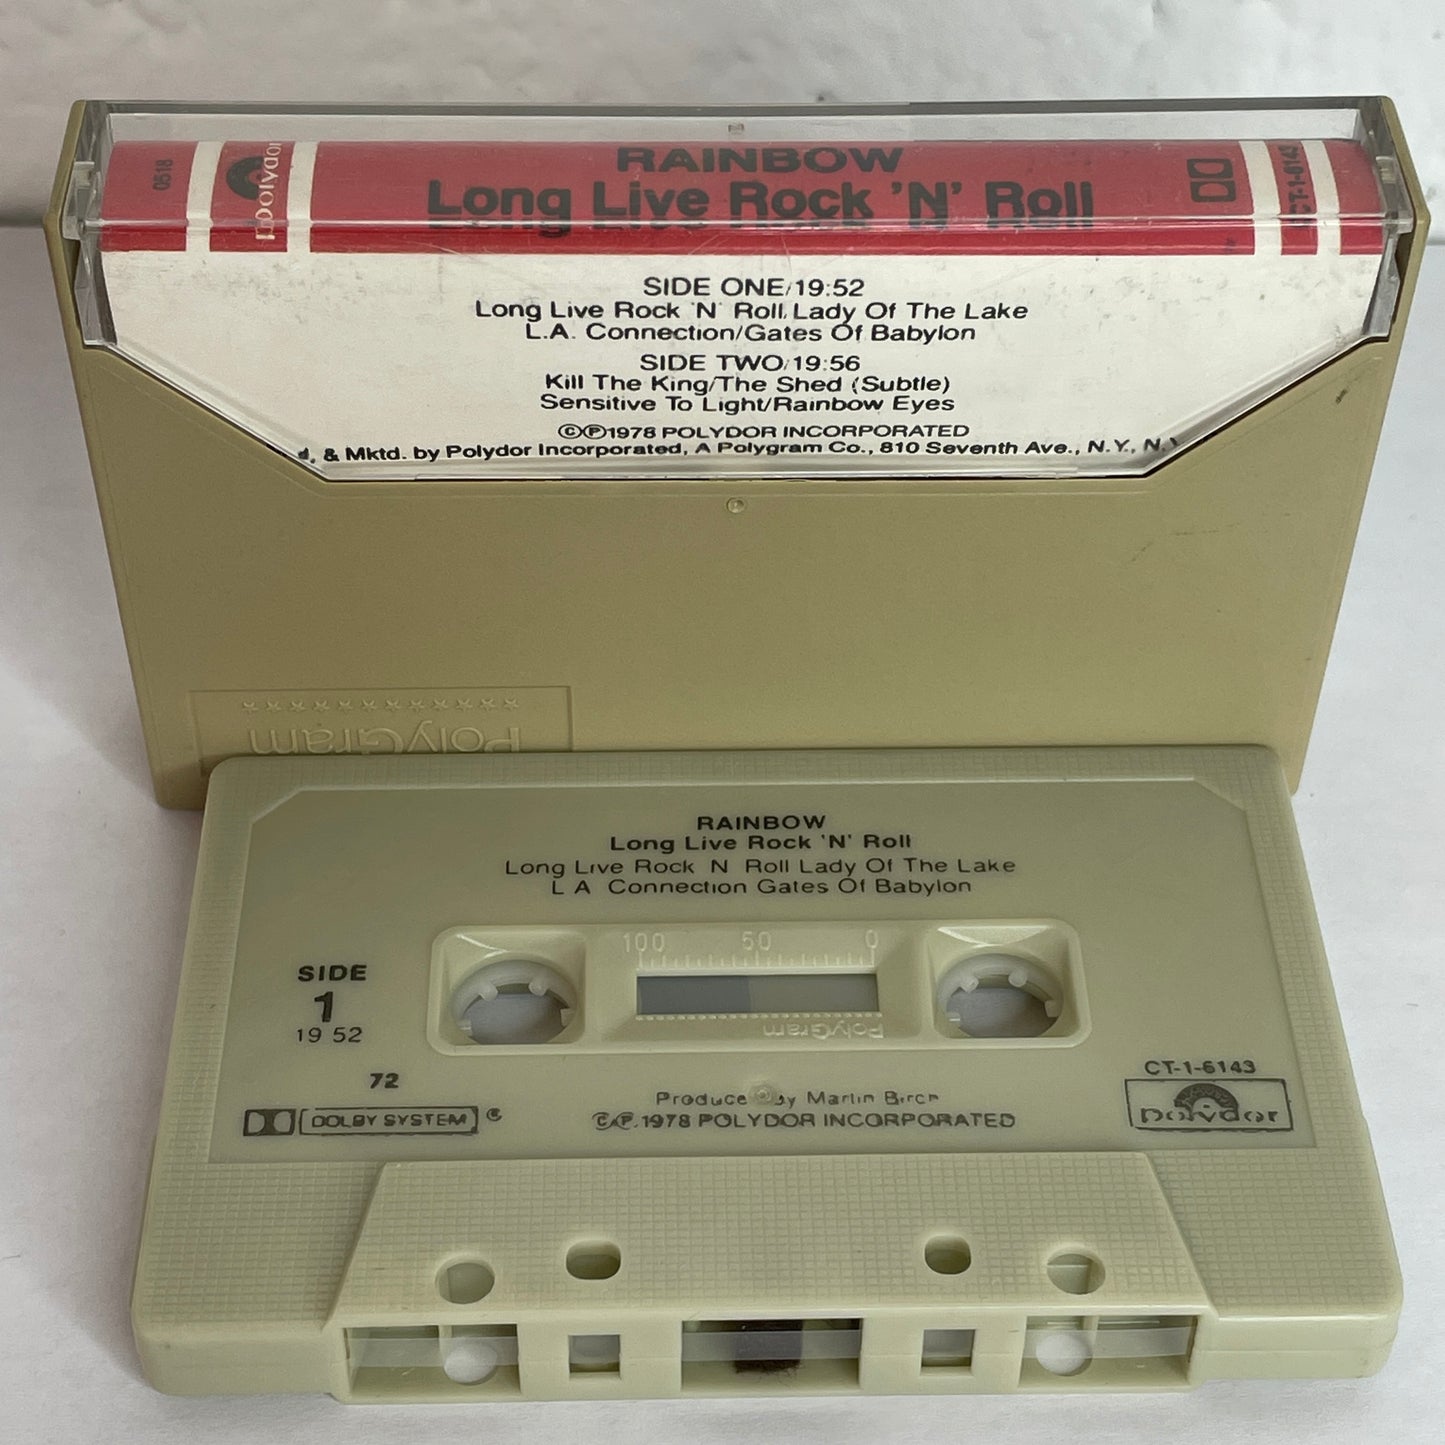 Rainbow - Long Live Rock 'N' Roll original cassette tape